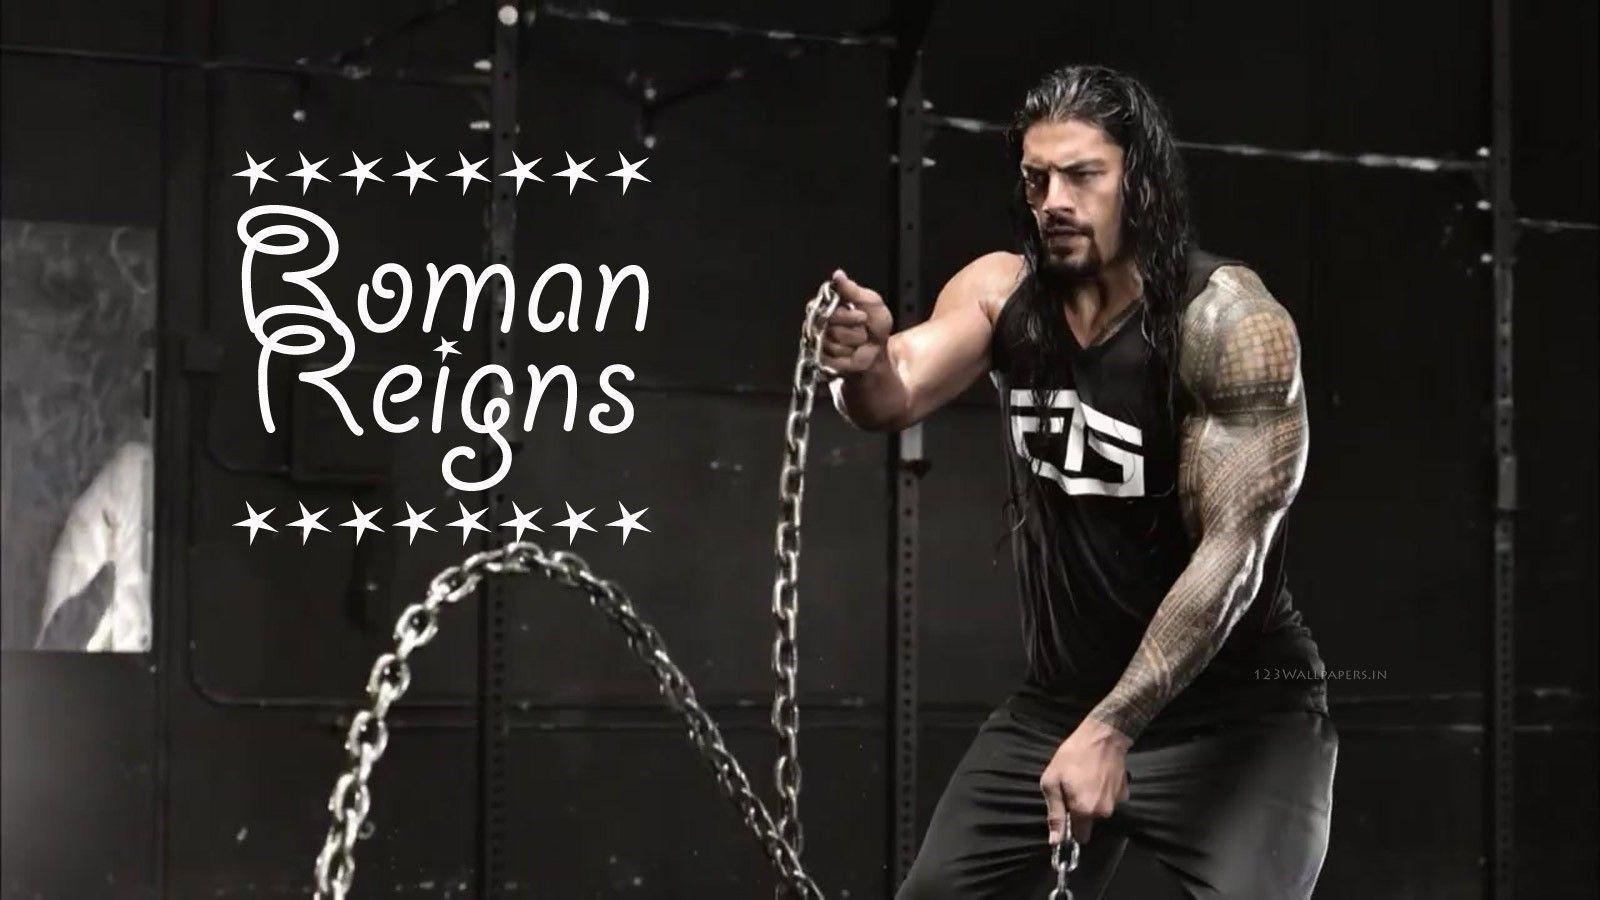 Roman reigns 2016 training HD Wallpaper